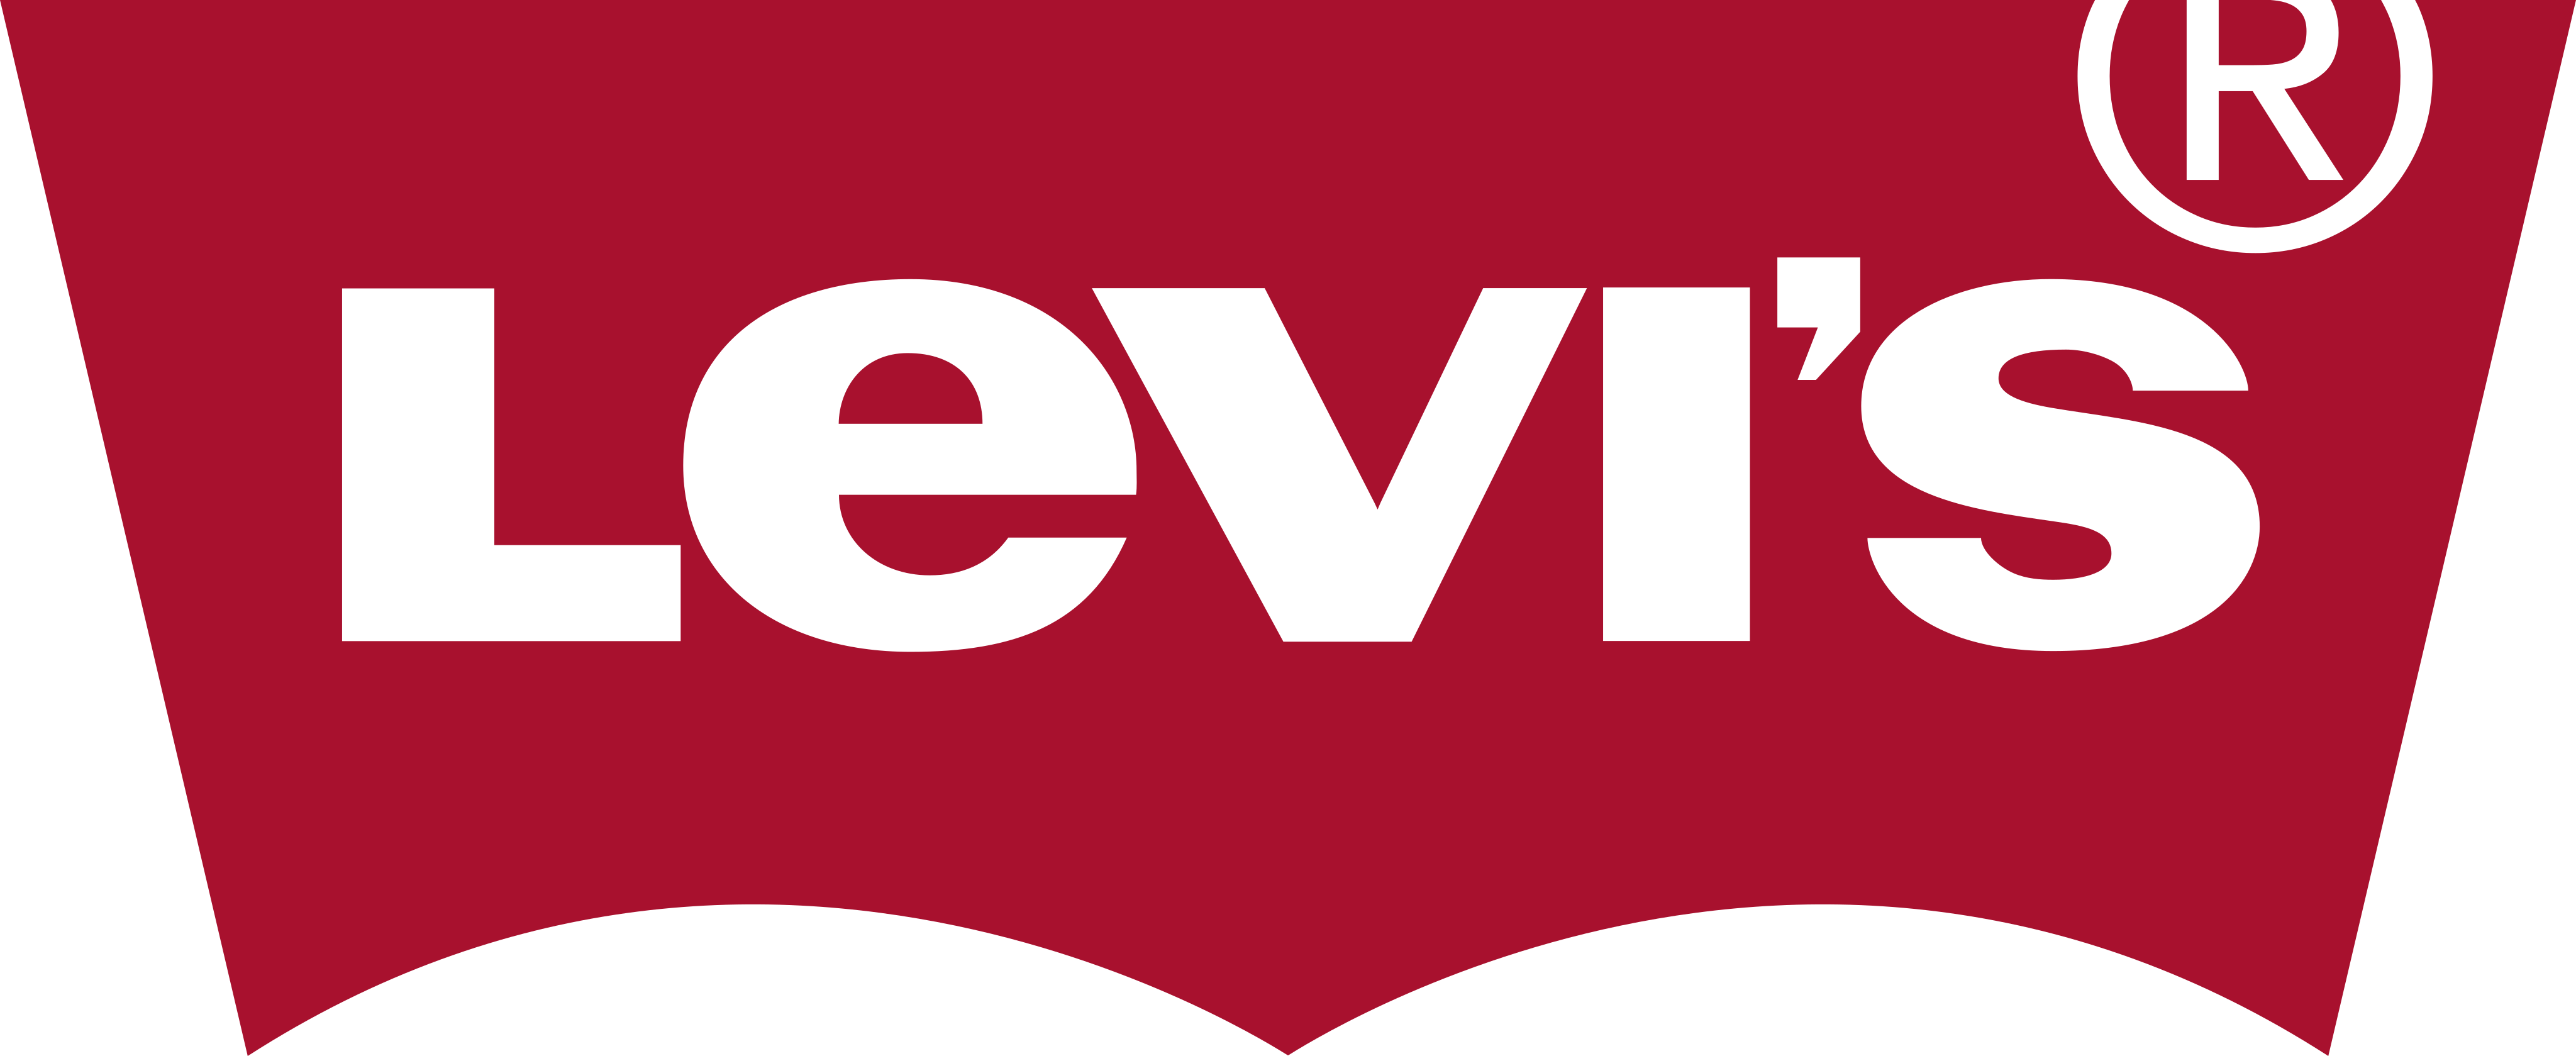 levis logo 1 - Levi's Logo